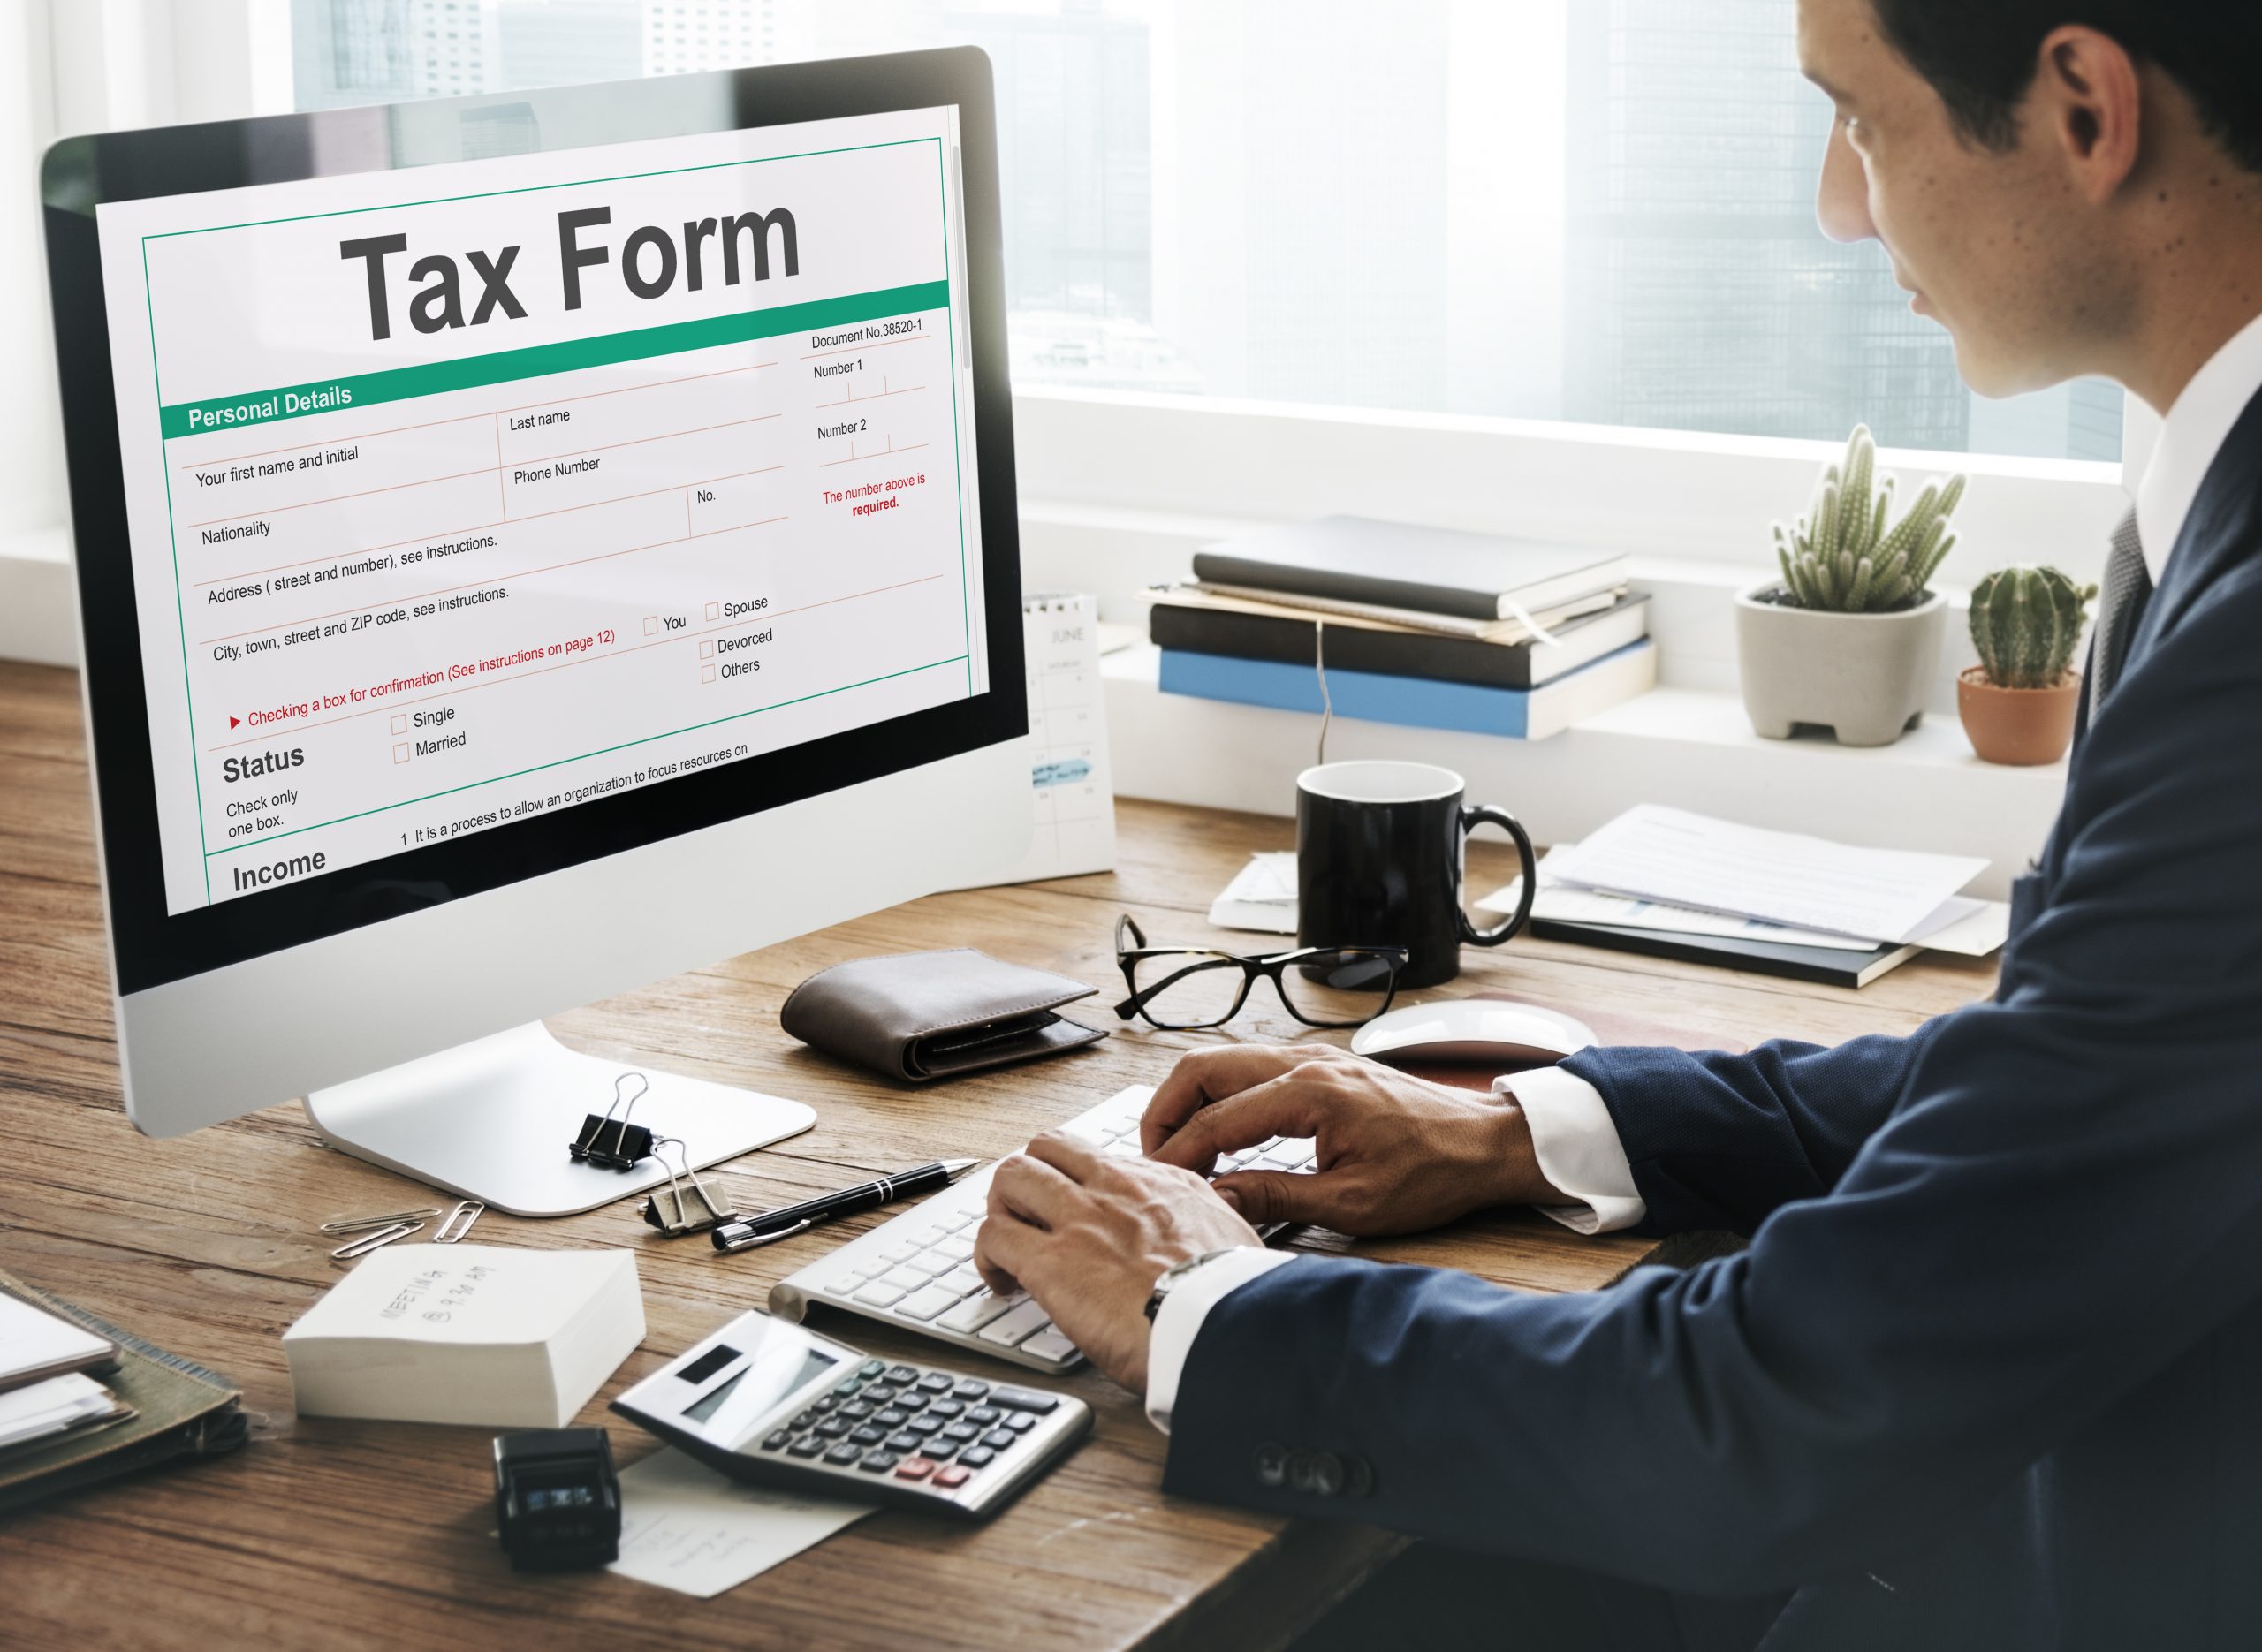 filing income tax return